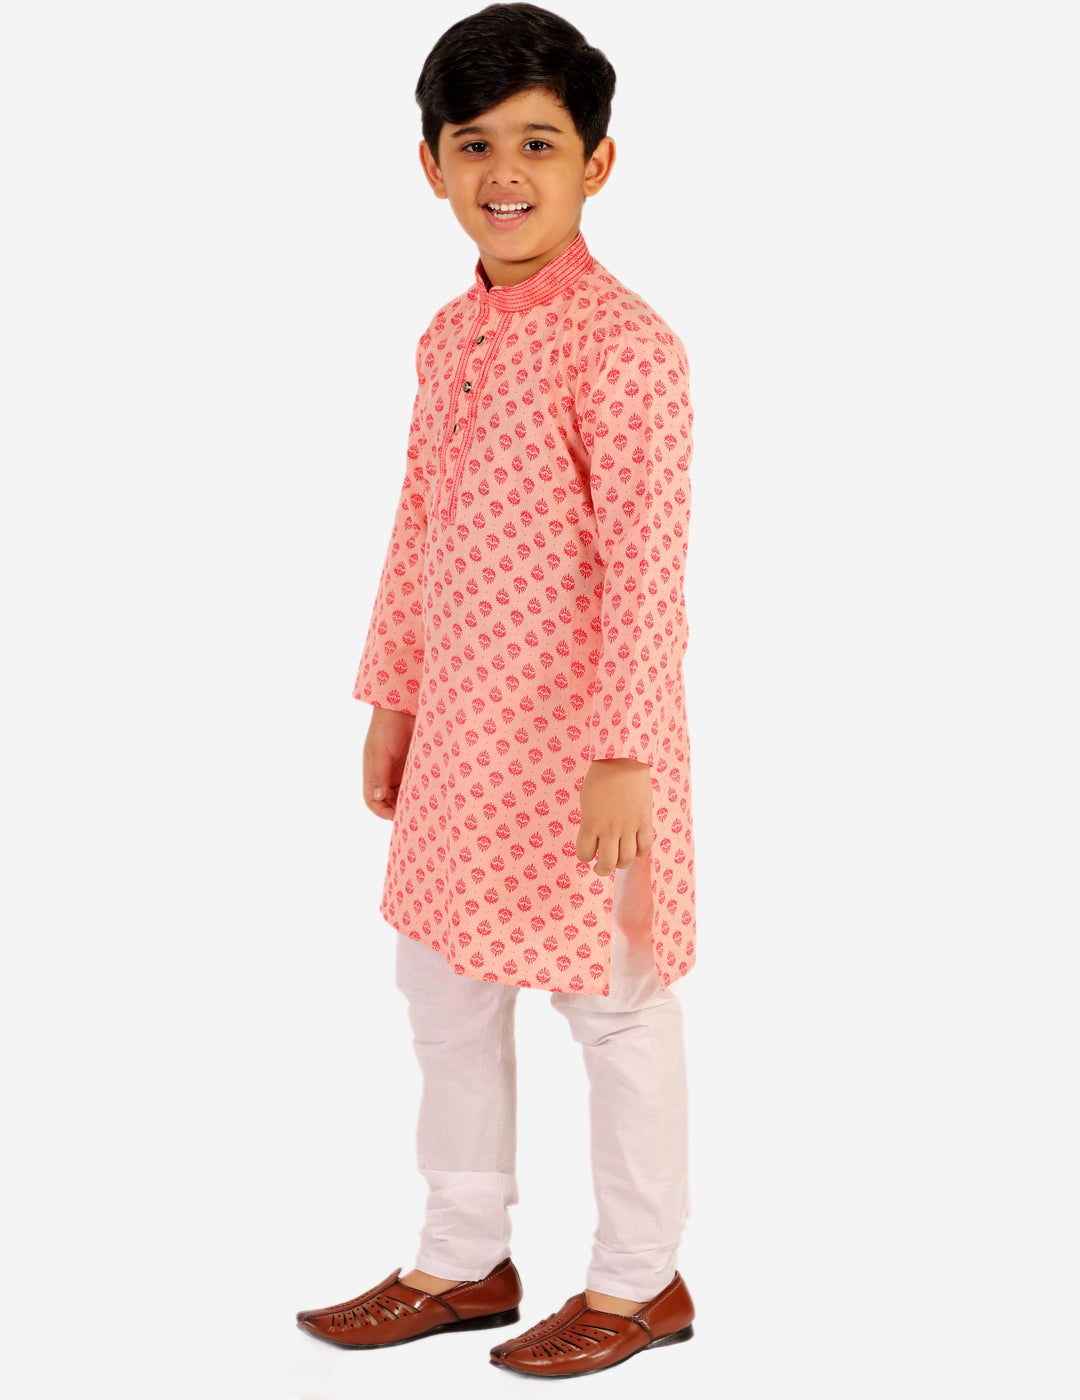 Pro Ethic Kurta Pajama For Boys Cotton Red (S-167)